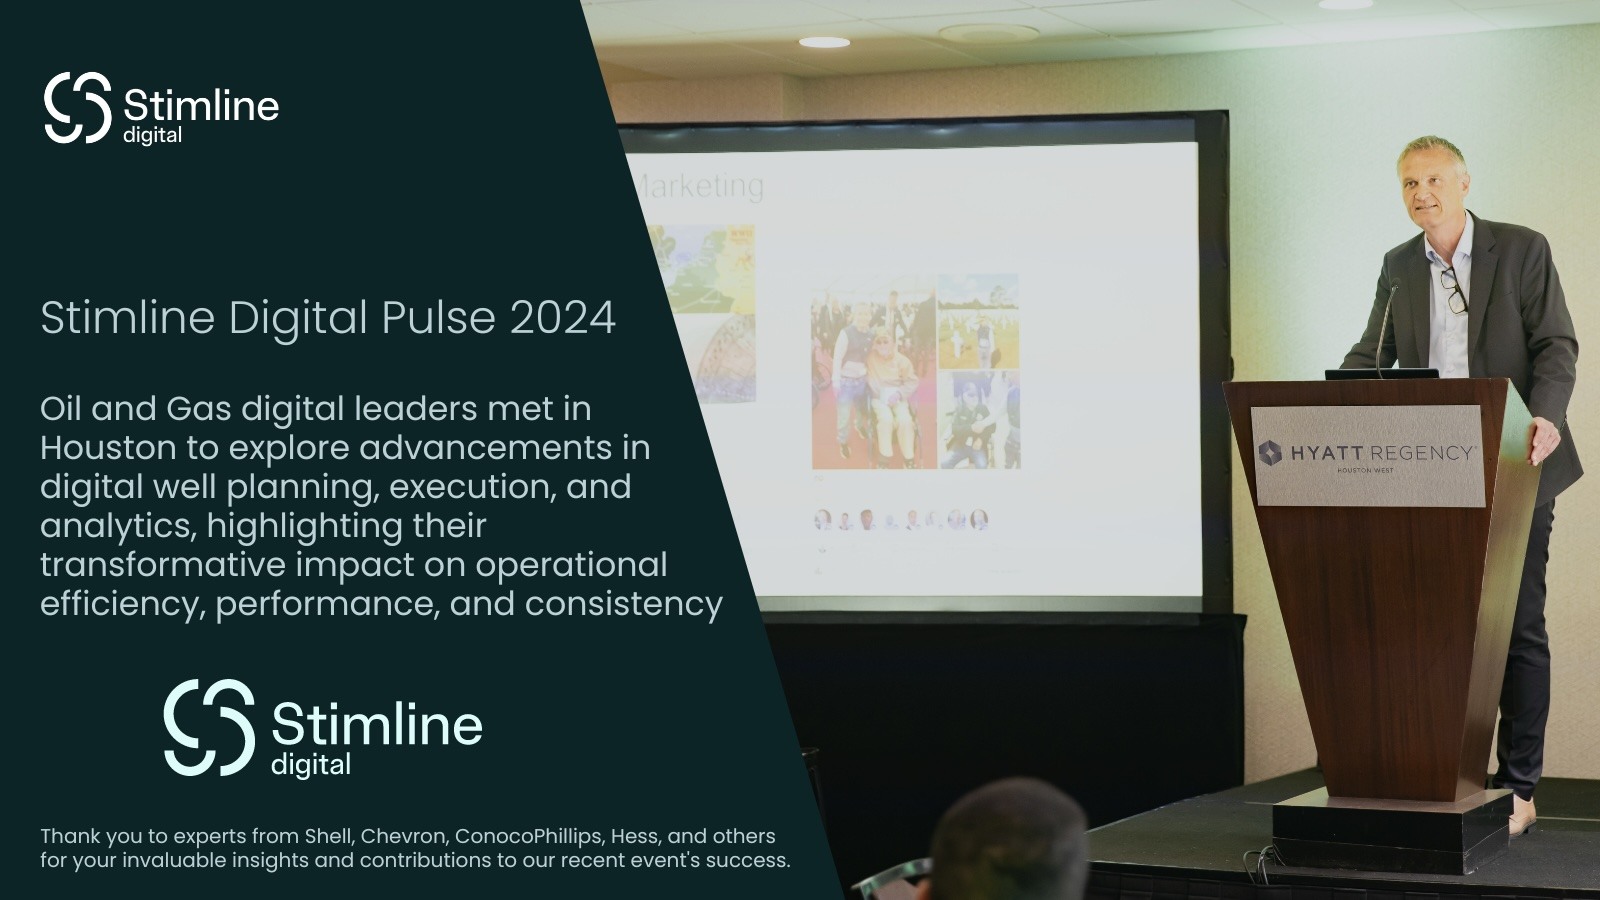 Stimline Digital Pulse 2024: Shaping Tomorrow's Digital Well Planning